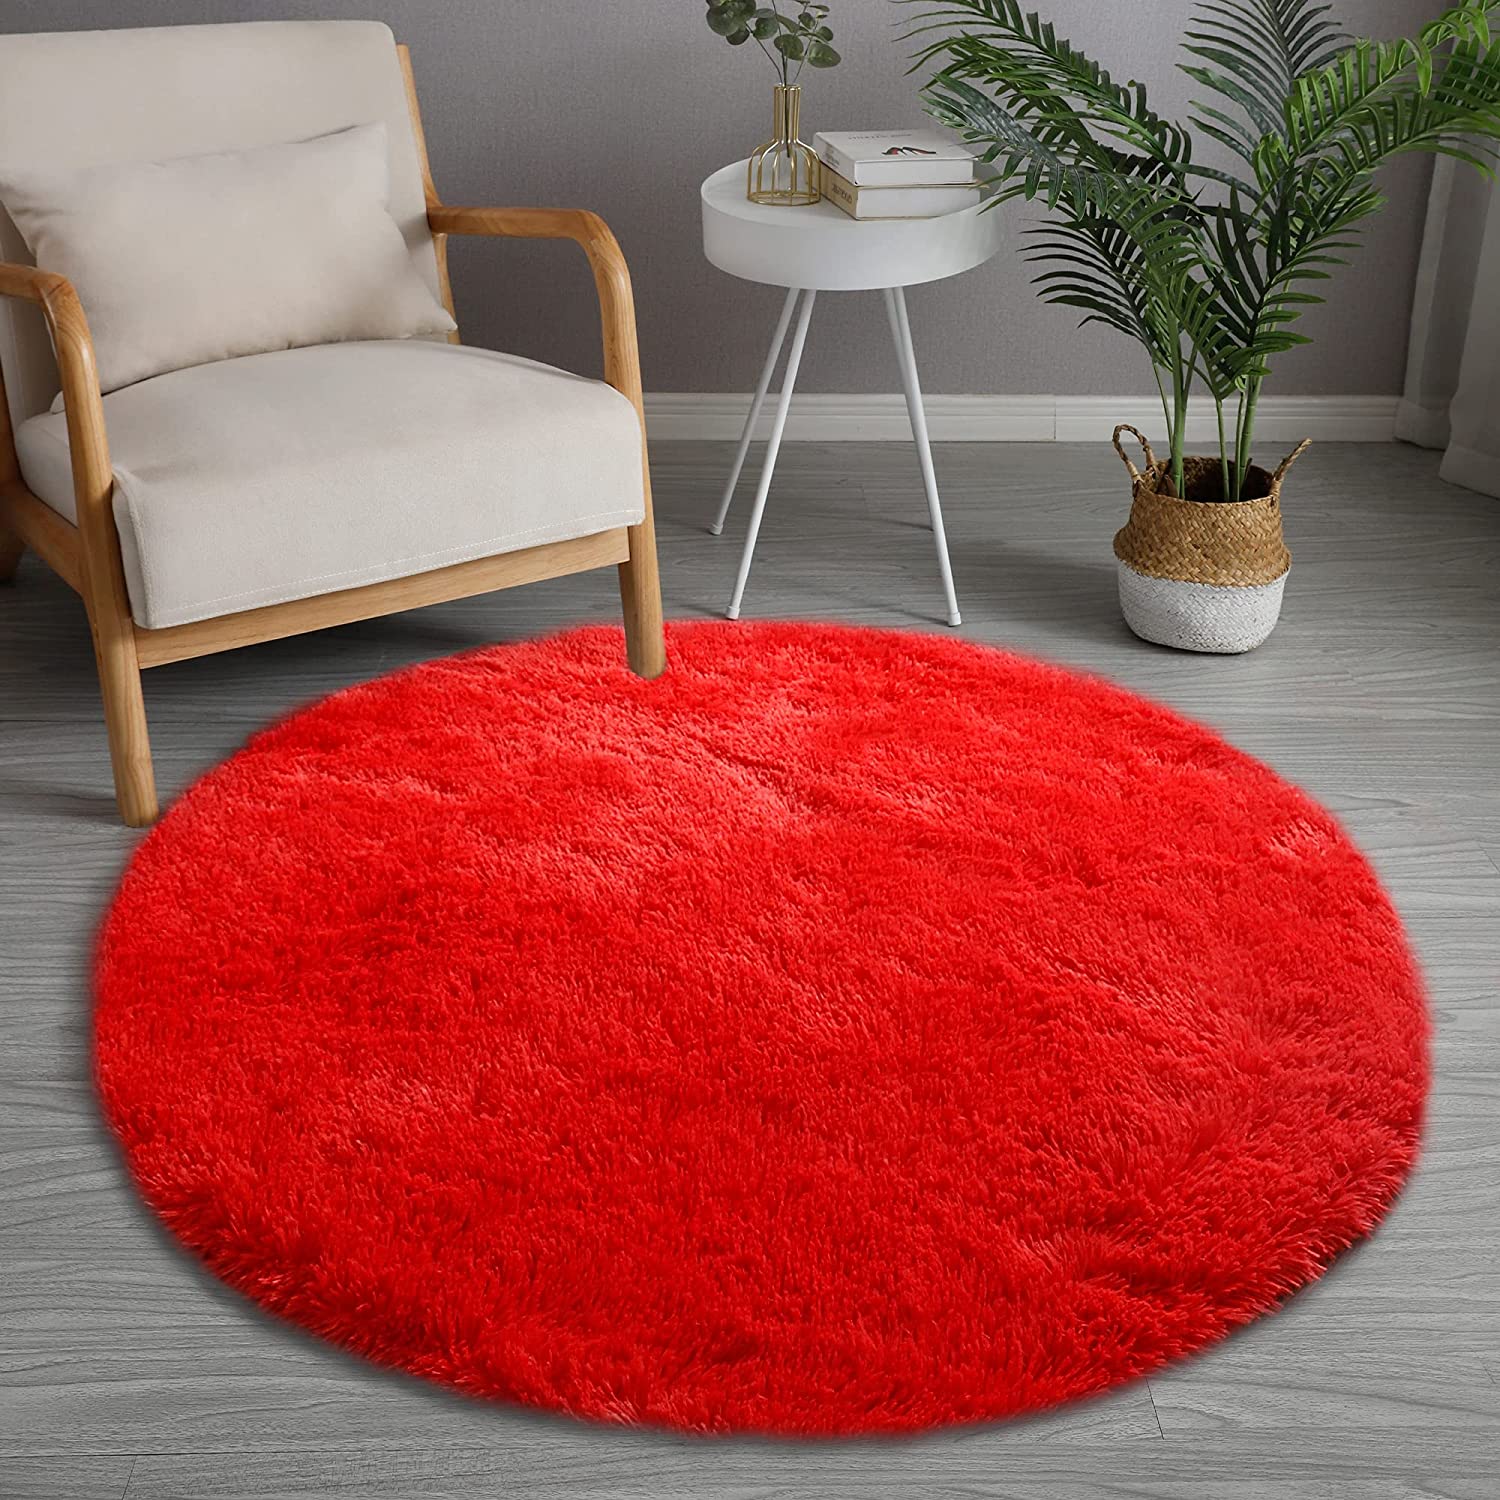 GKLUCKIN Shag Ultra Soft Area Rug, Fluffy 4' Round Red Rugs Plush Non-Skid Indoor